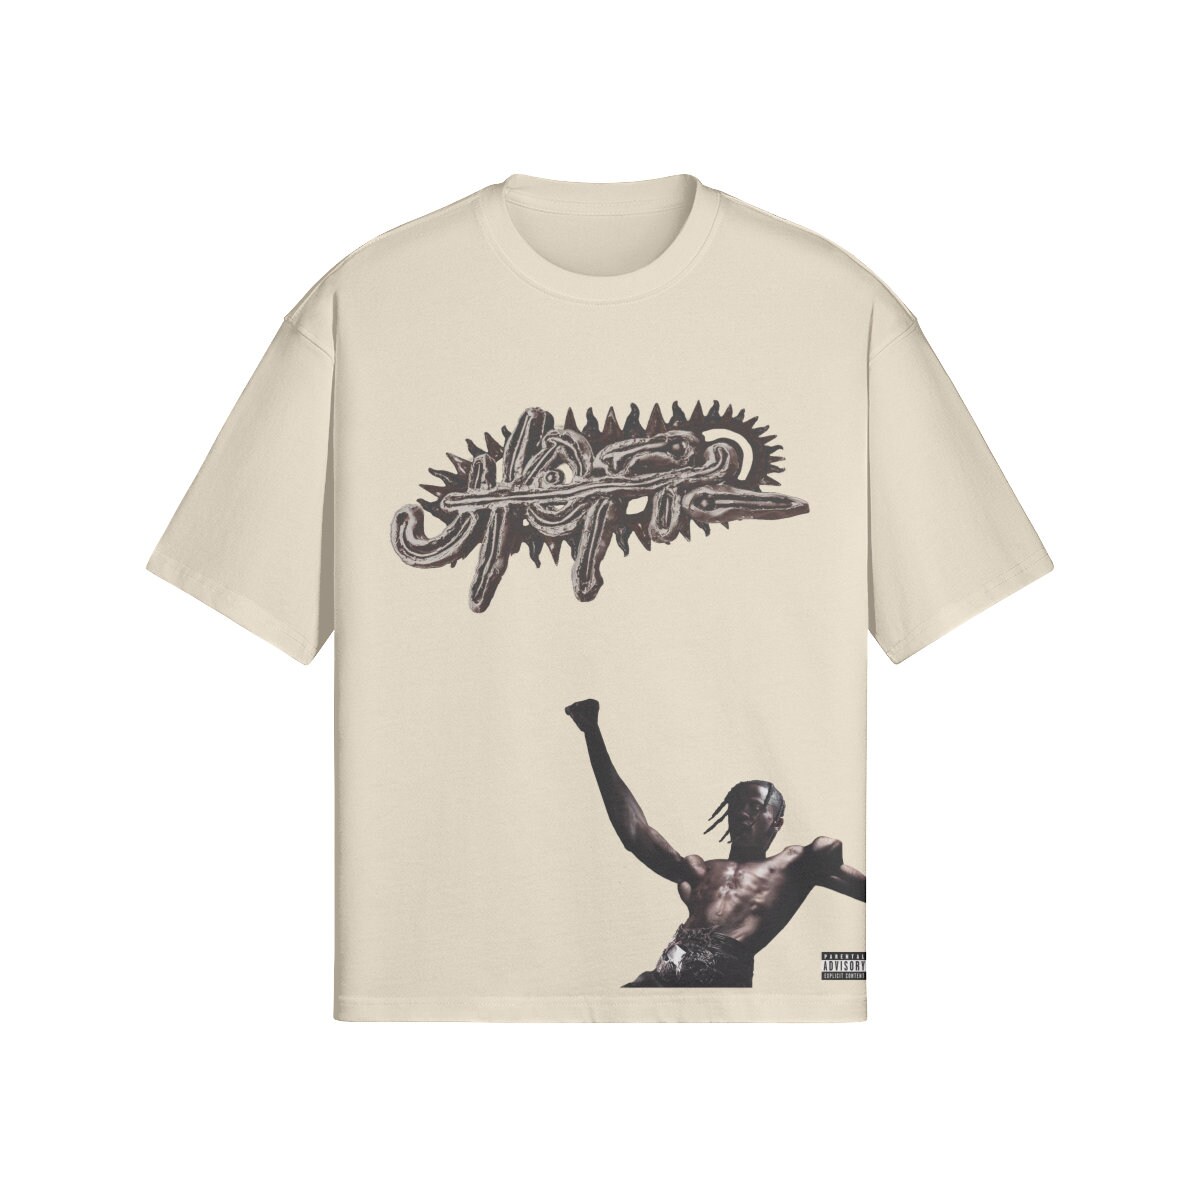 Travis Scott Utopia Merch Essential T-Shirt for Sale by KyotoStreet